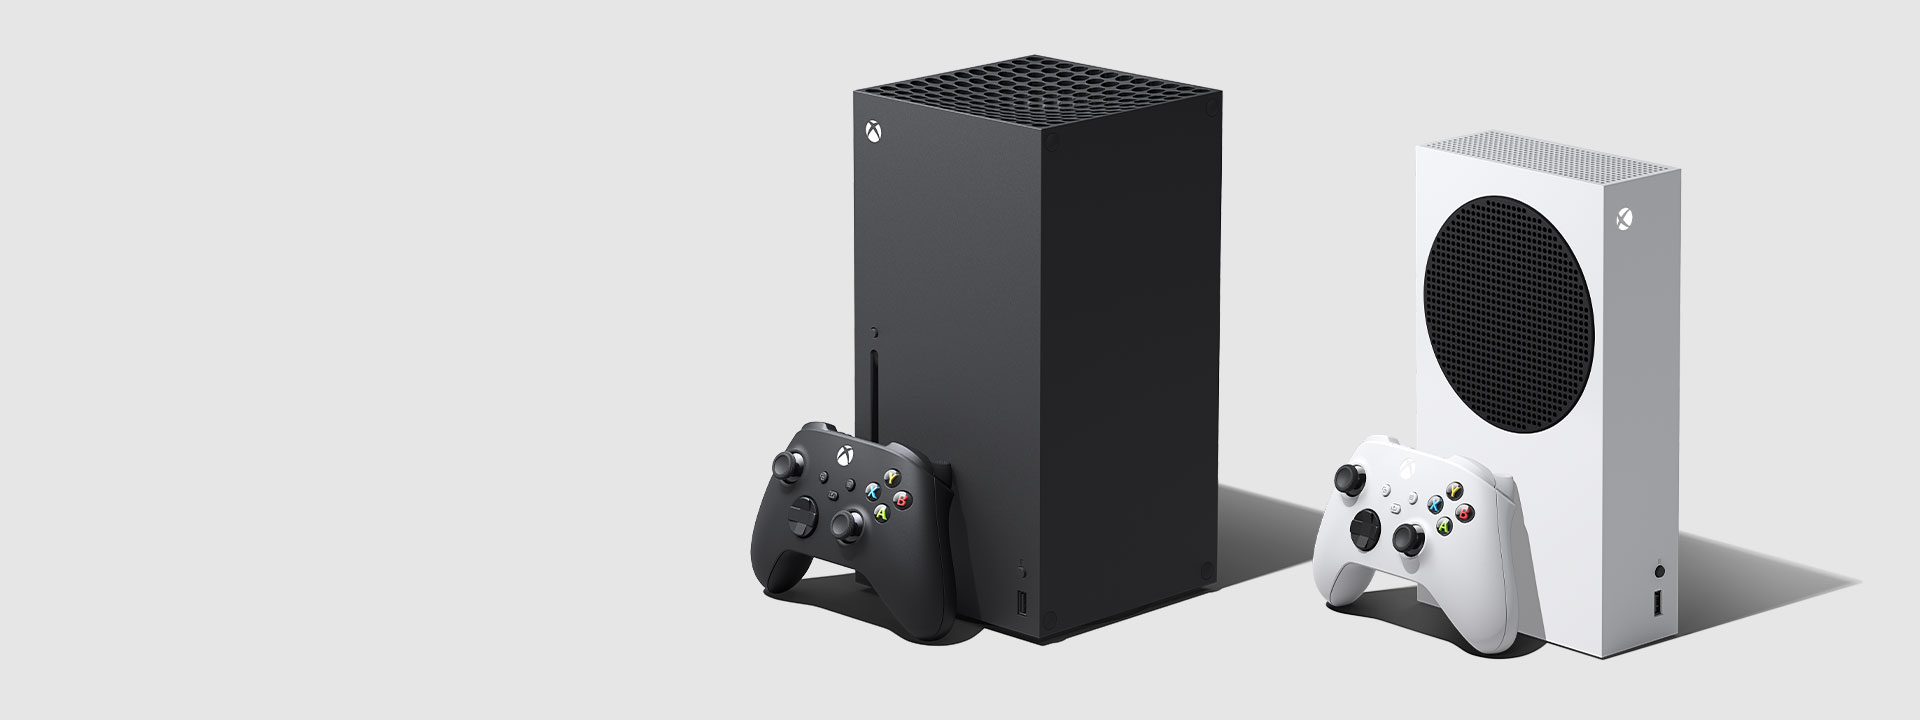  Xbox Series X med en svart Xbox-handkontroll och Xbox Series S med en vit Xbox-handkontroll